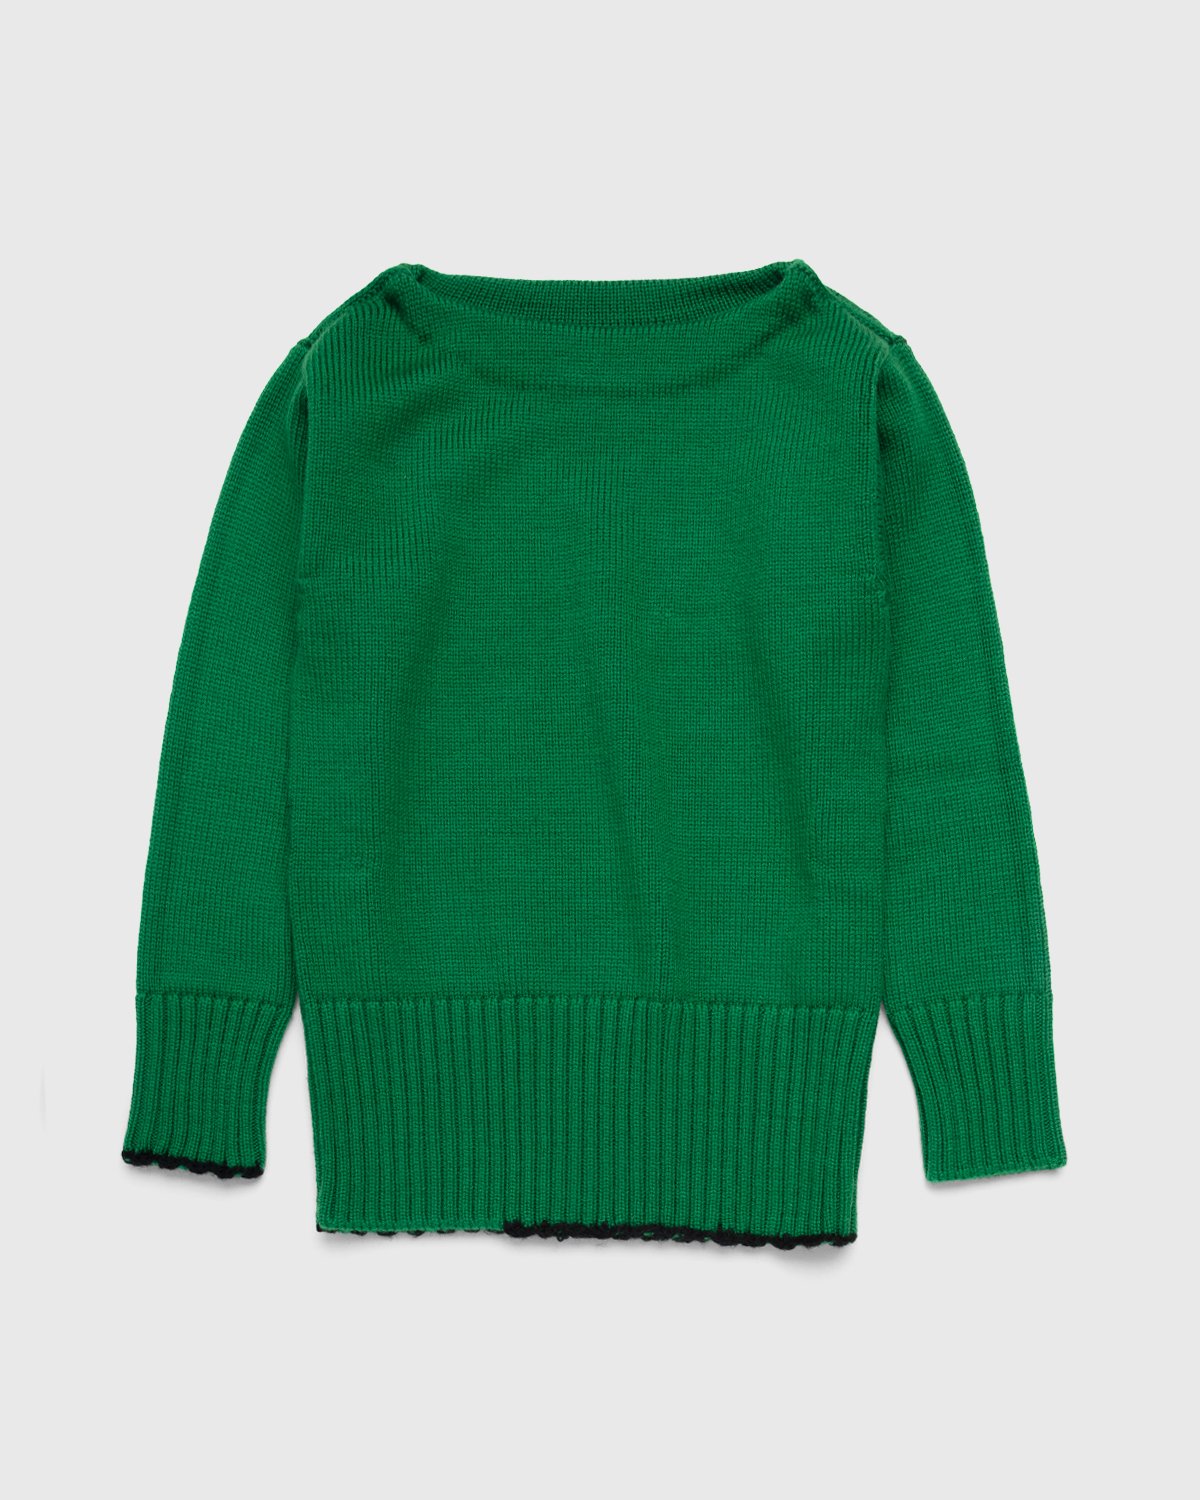 Maison Margiela - Summer Camp Sweater Green - Clothing - Green - Image 1